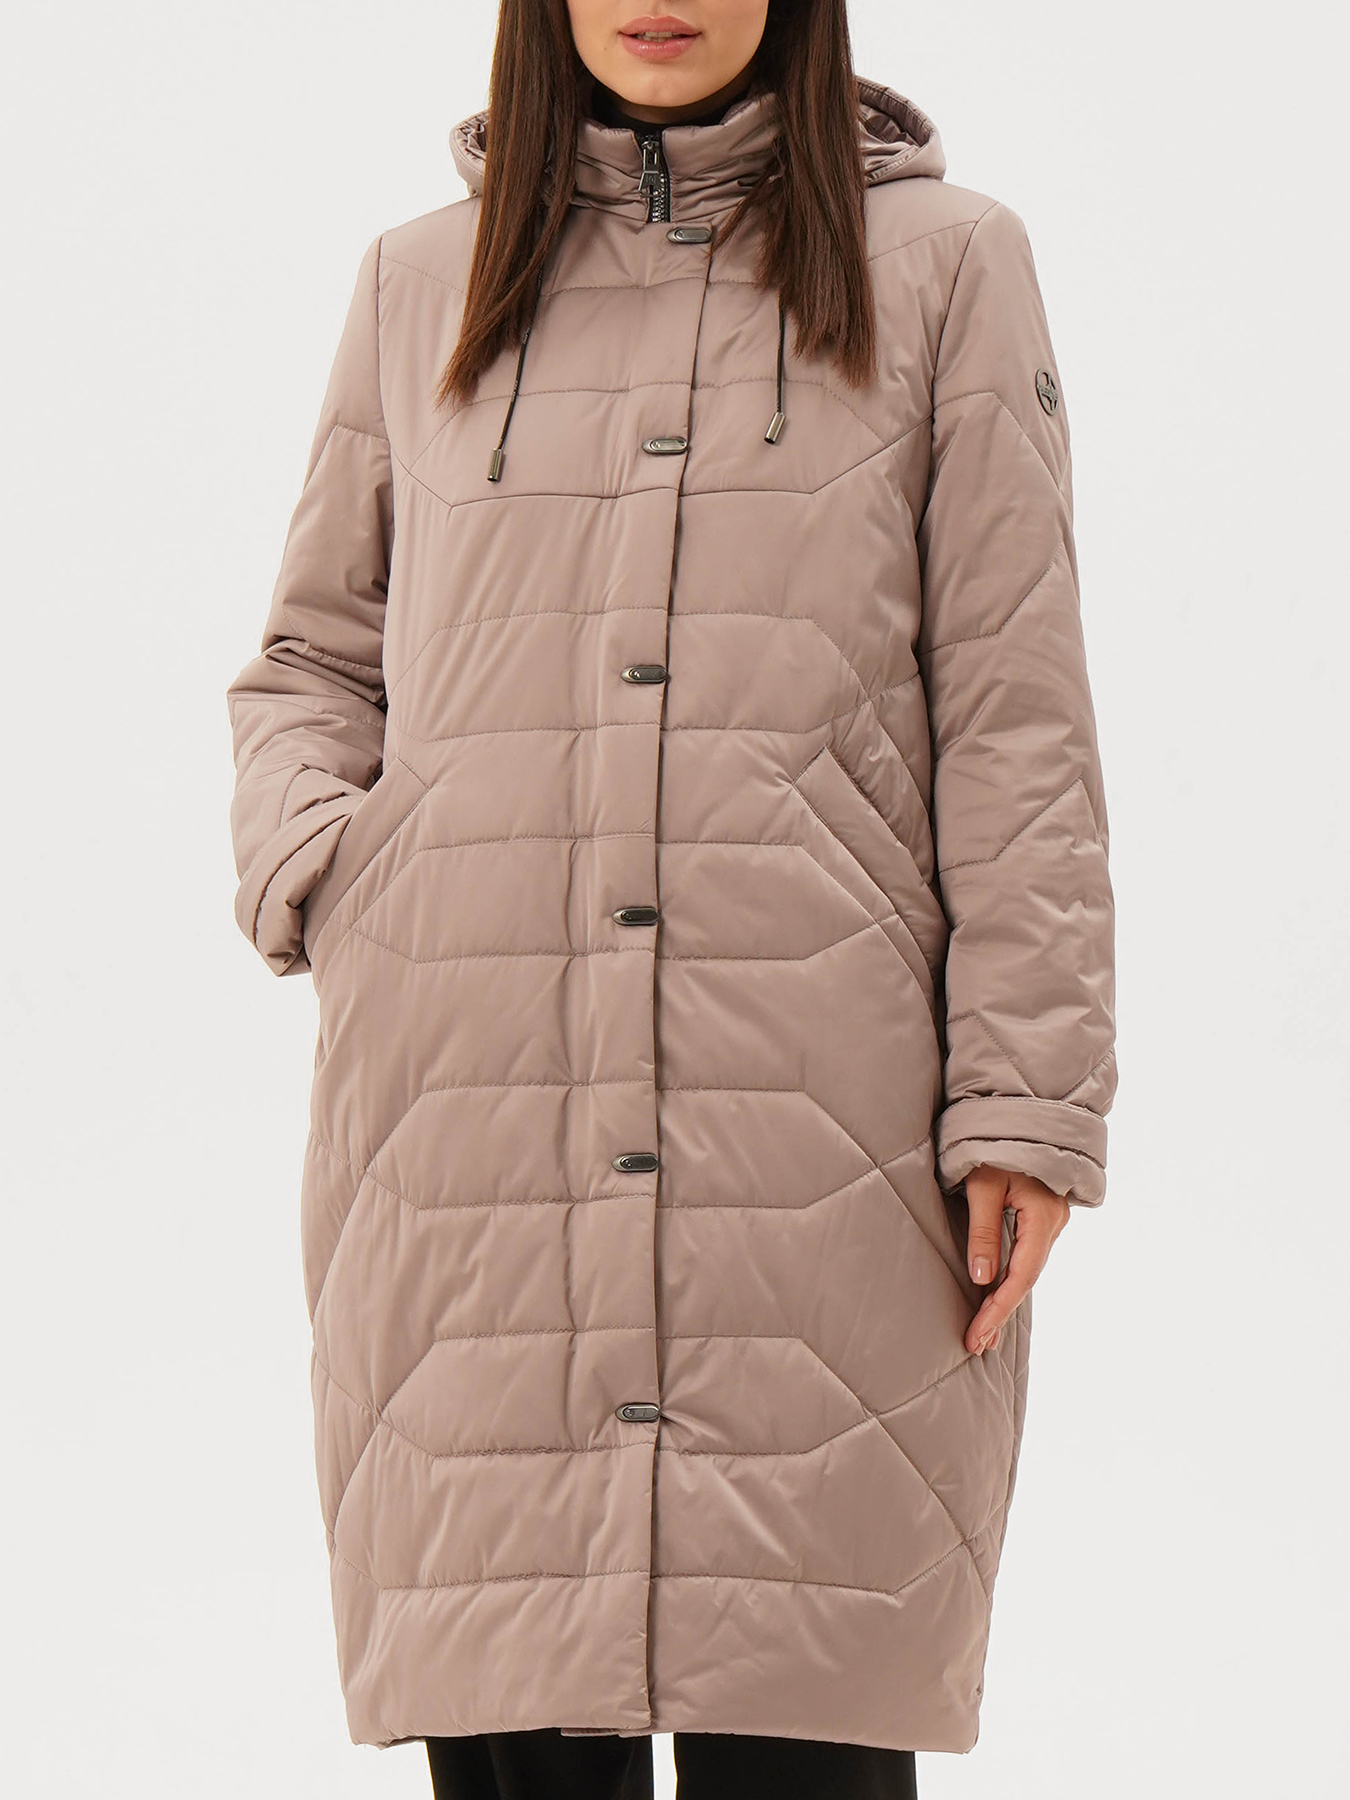 Пальто зимнее Maritta 433520-020, цвет бежевый, размер 44 - фото 1